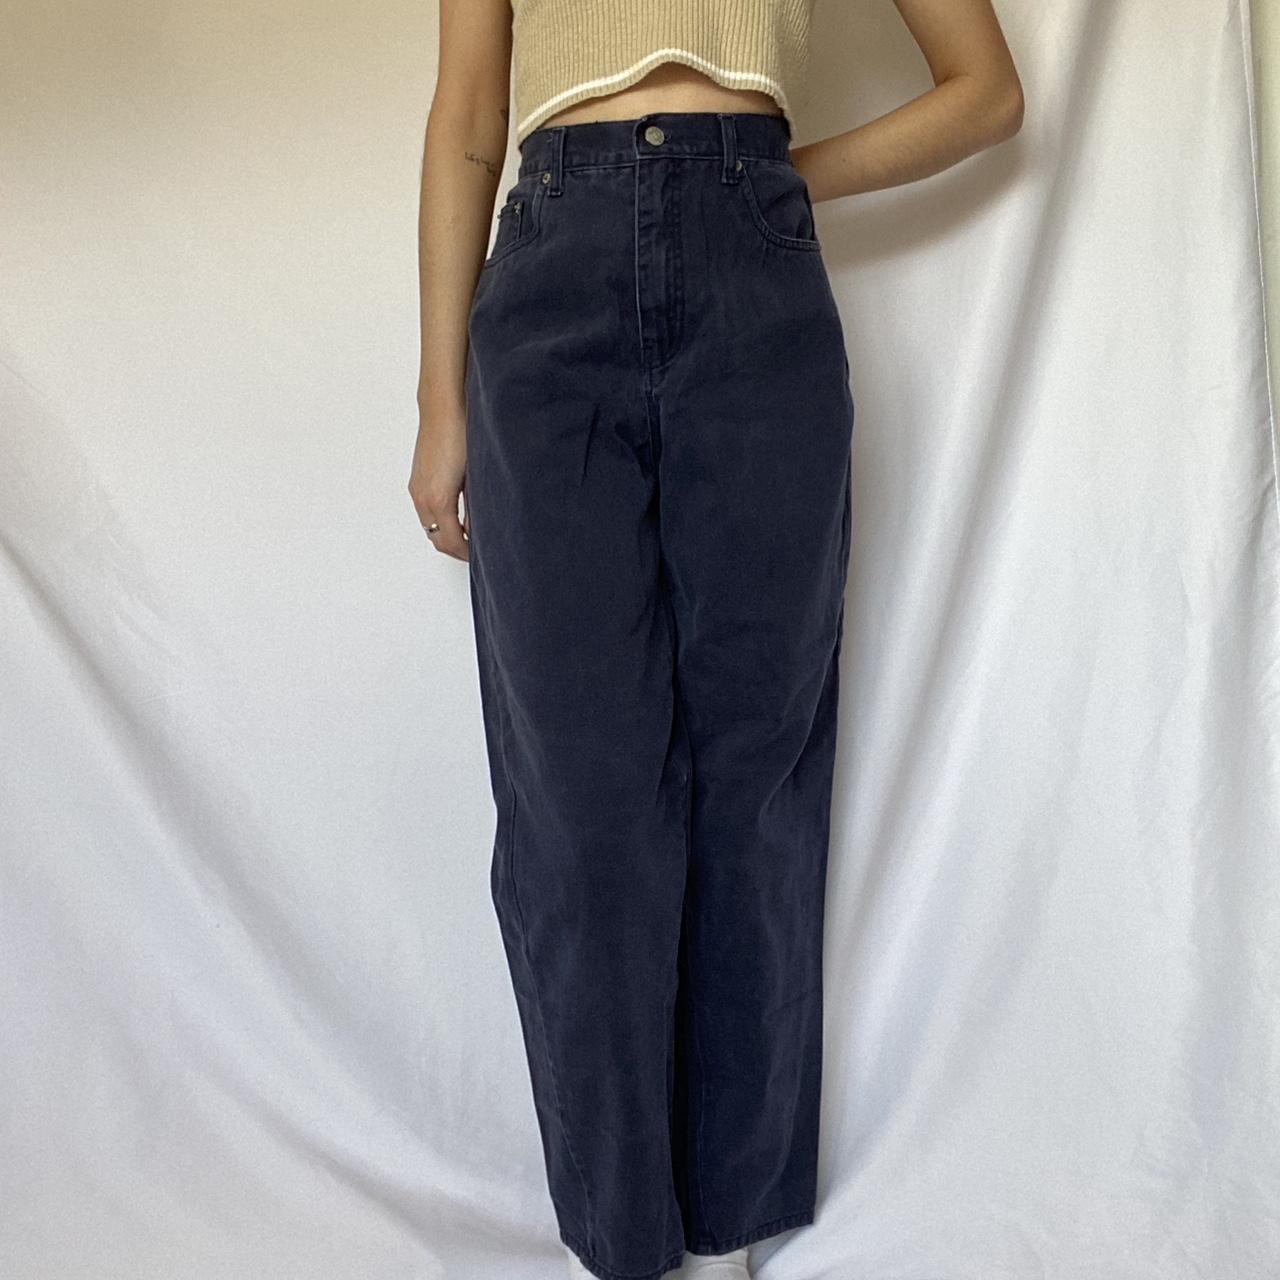 vintage 90s mom jeans condition: 10/10 size: 28”... - Depop